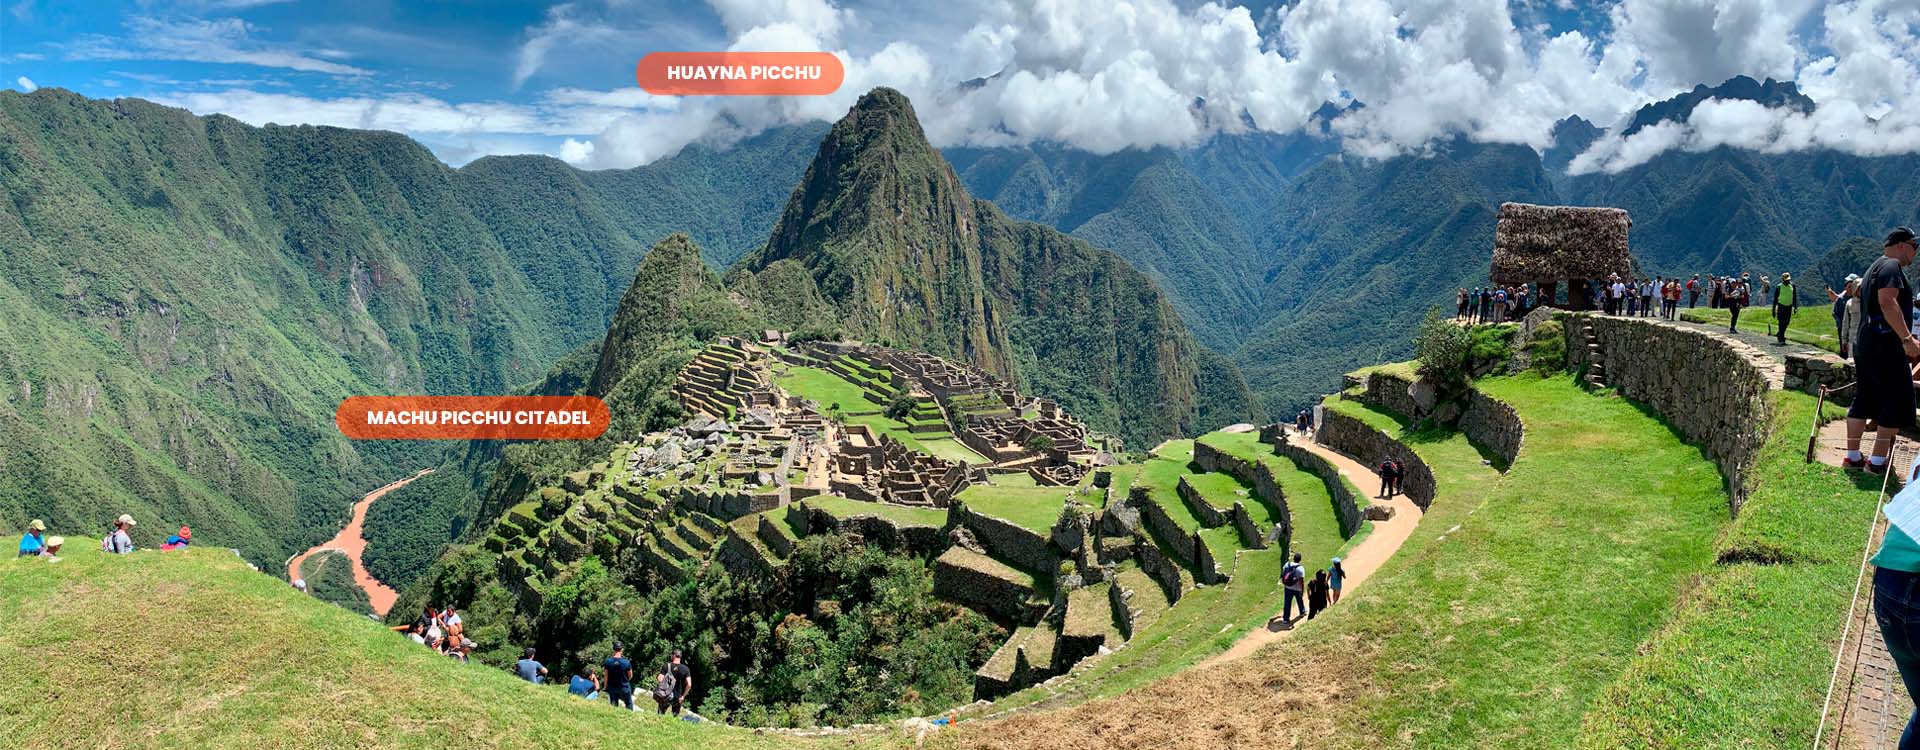 Huayna Picchu Mountain Information